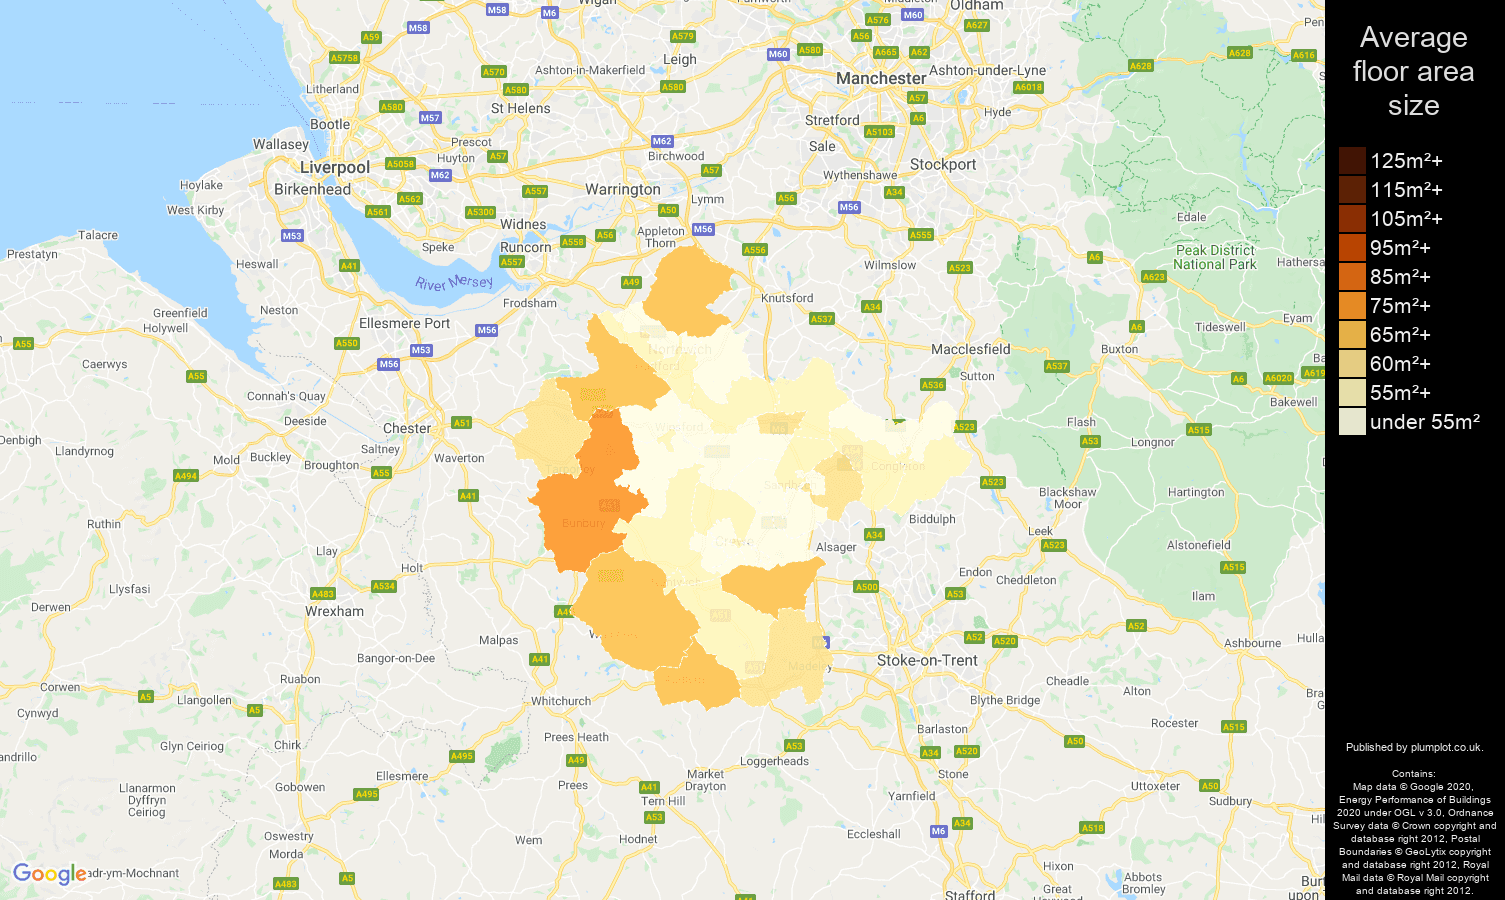 Crewe map of average floor area size of flats